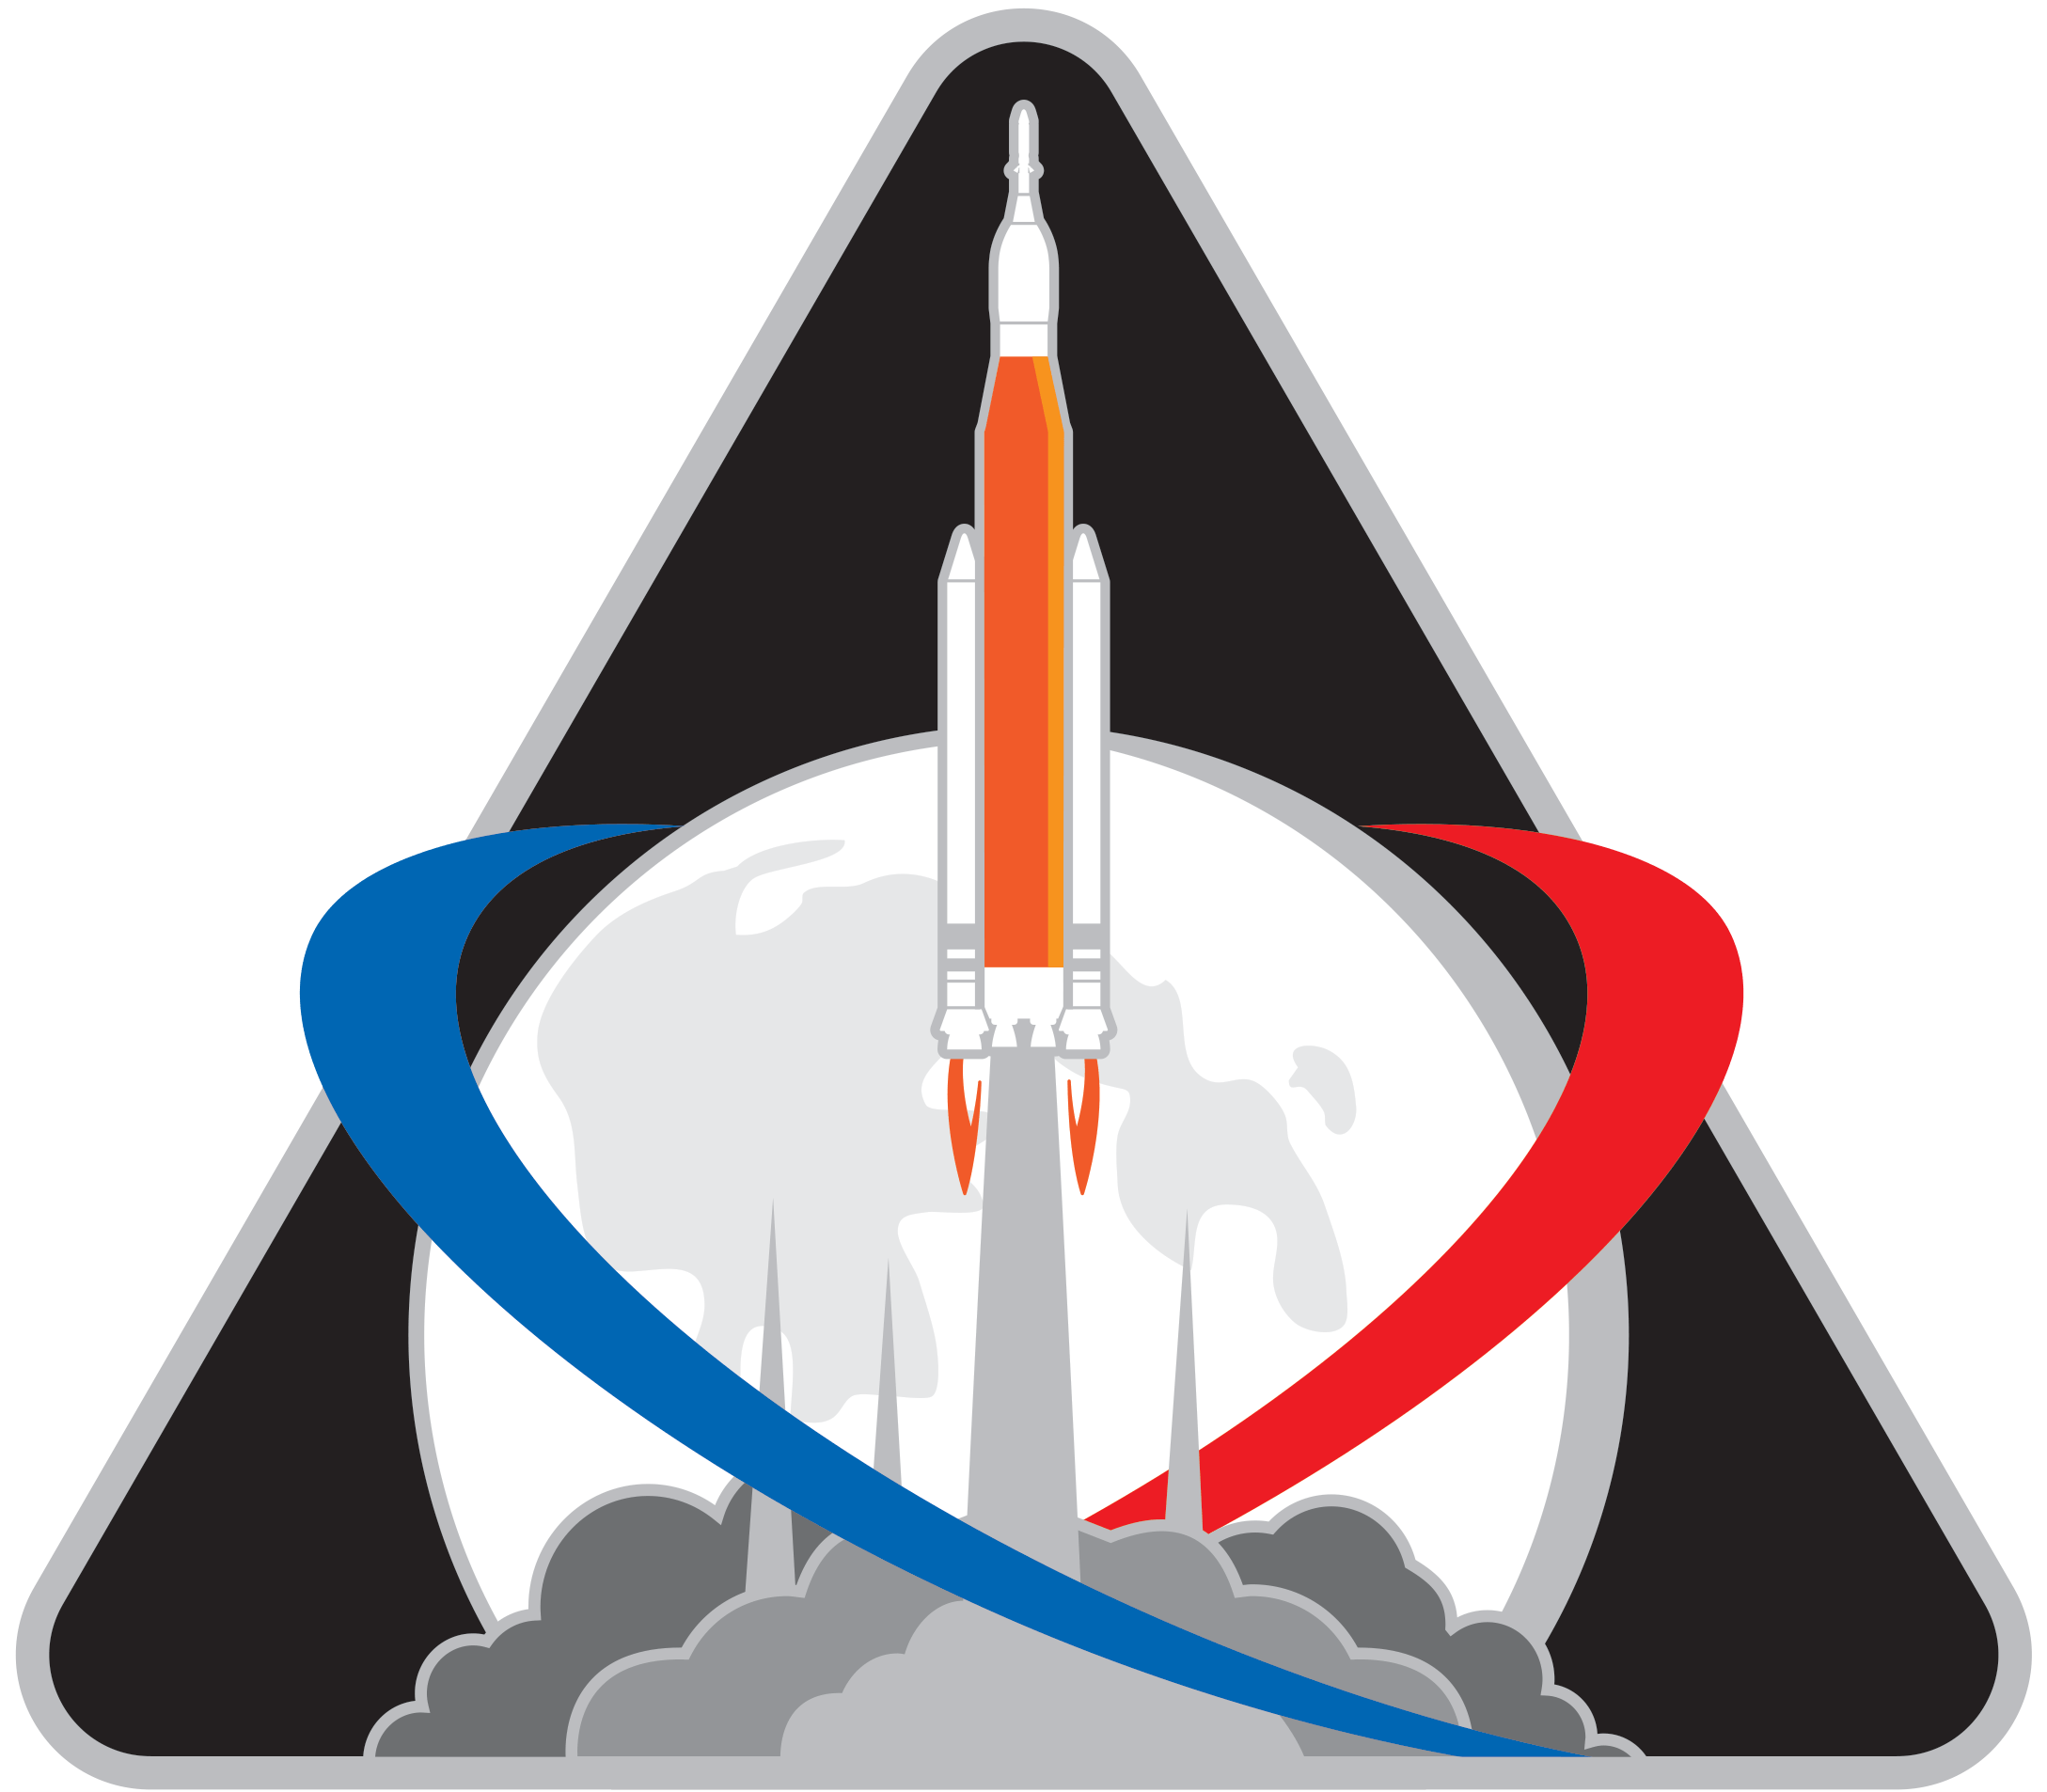 NASA Mission Logo - NASA Reveals The Exploration Mission-1 Logo Patch & Mission Identifier